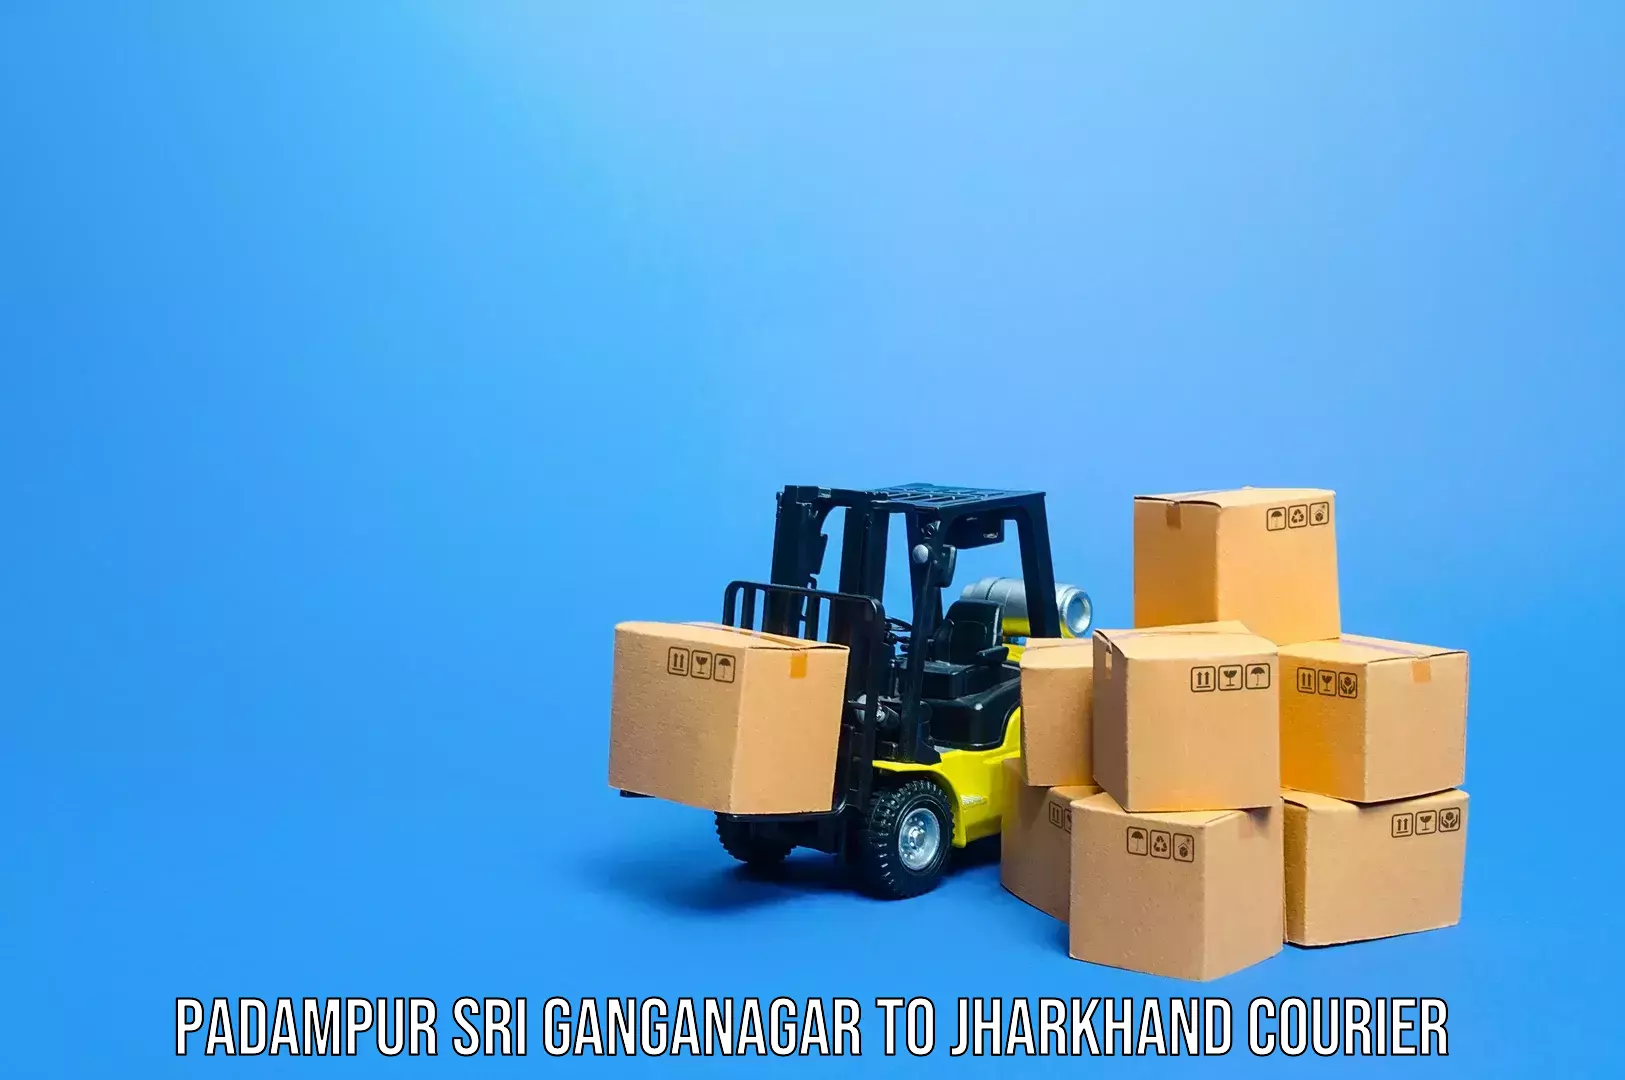 Luggage shipment processing Padampur Sri Ganganagar to Jharkhand